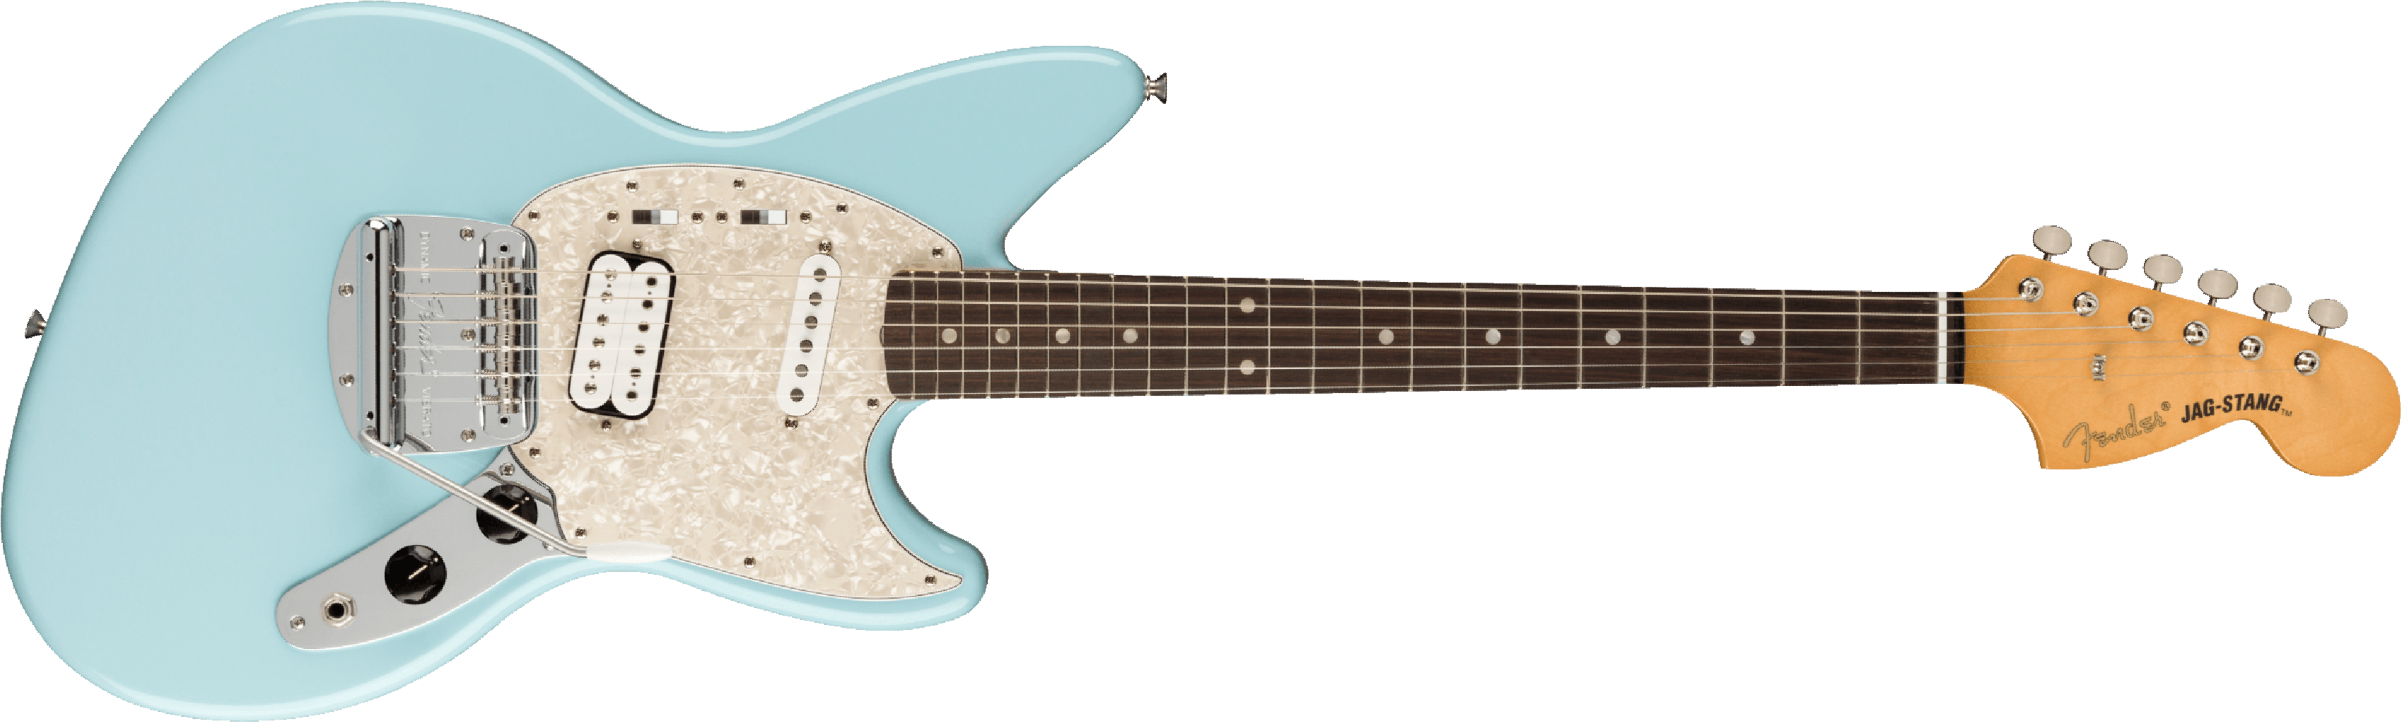 Fender Jag-stang Kurt Cobain Artist Hs Trem Rw - Sonic Blue - Retro-Rock-E-Gitarre - Main picture